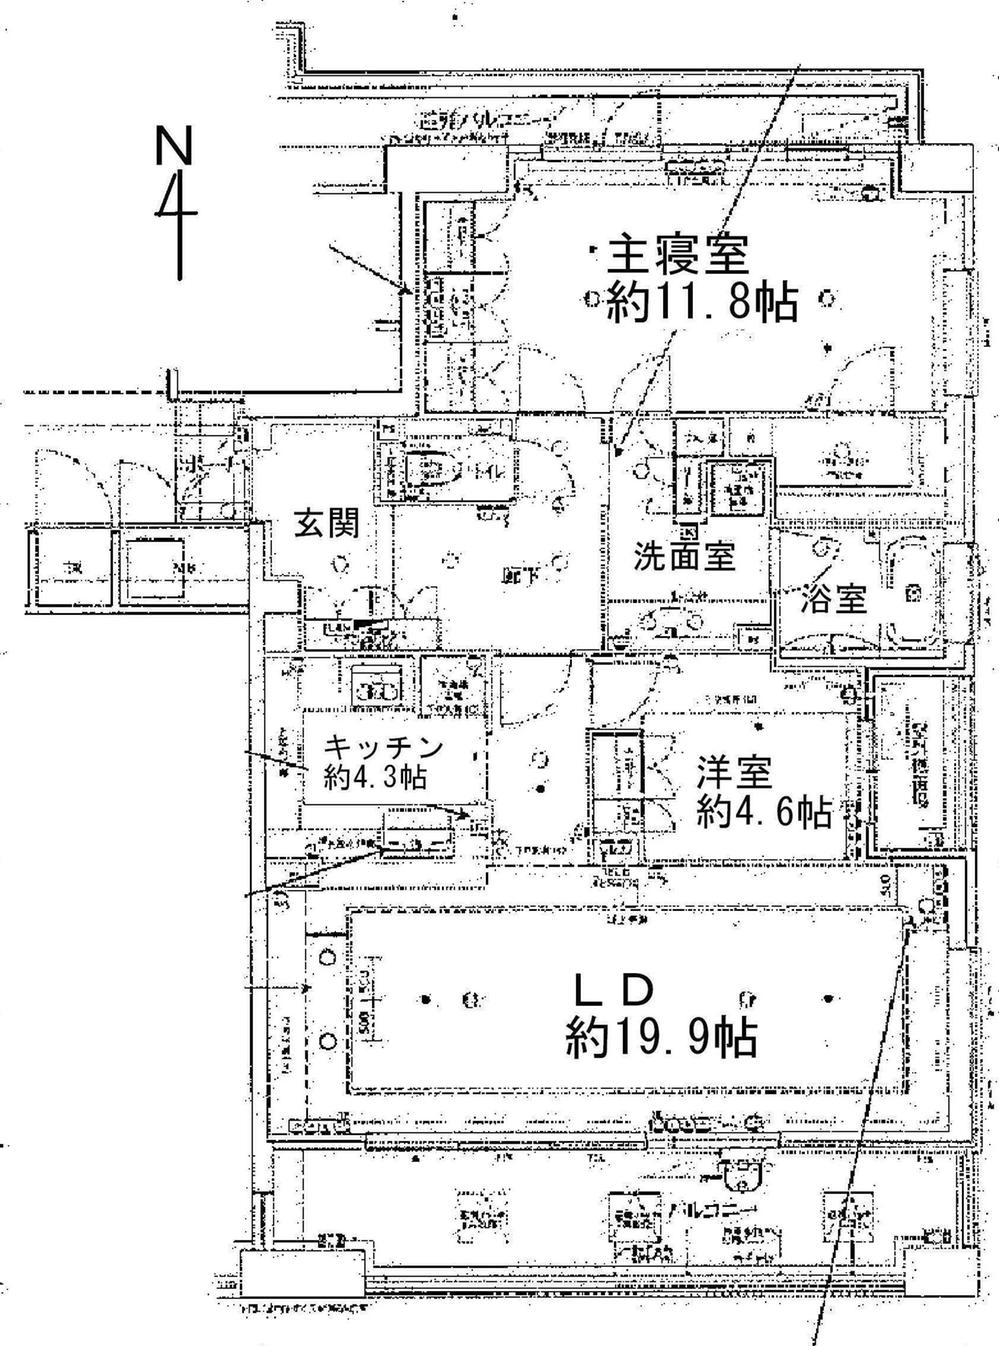 Floor plan. 2LDK, Price 55 million yen, Occupied area 96.03 sq m , Balcony area 14.45 sq m